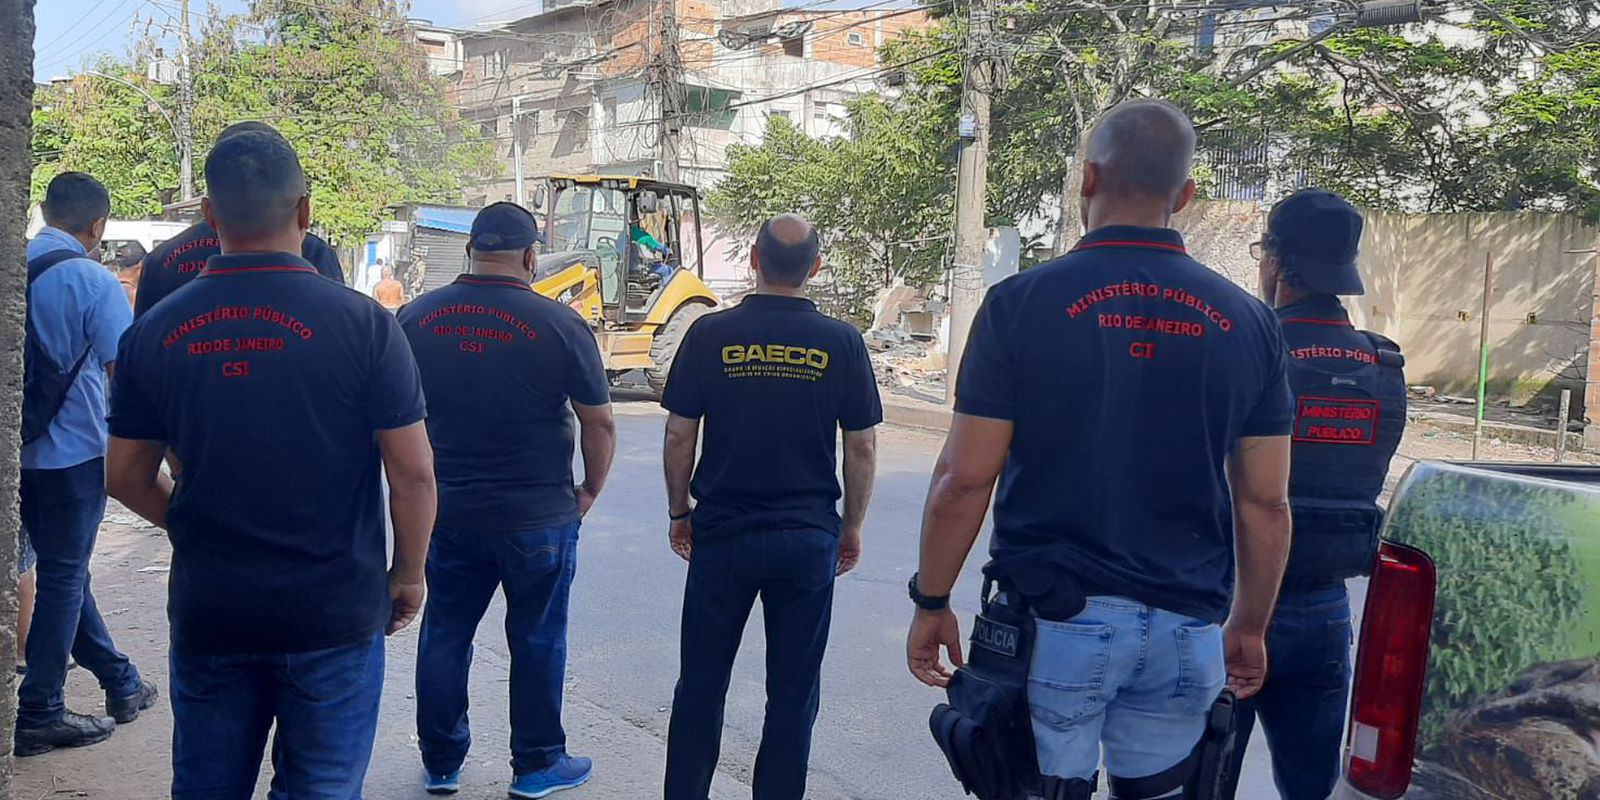 Task force demolishes 19 irregular properties in Rio das Pedras, RJ